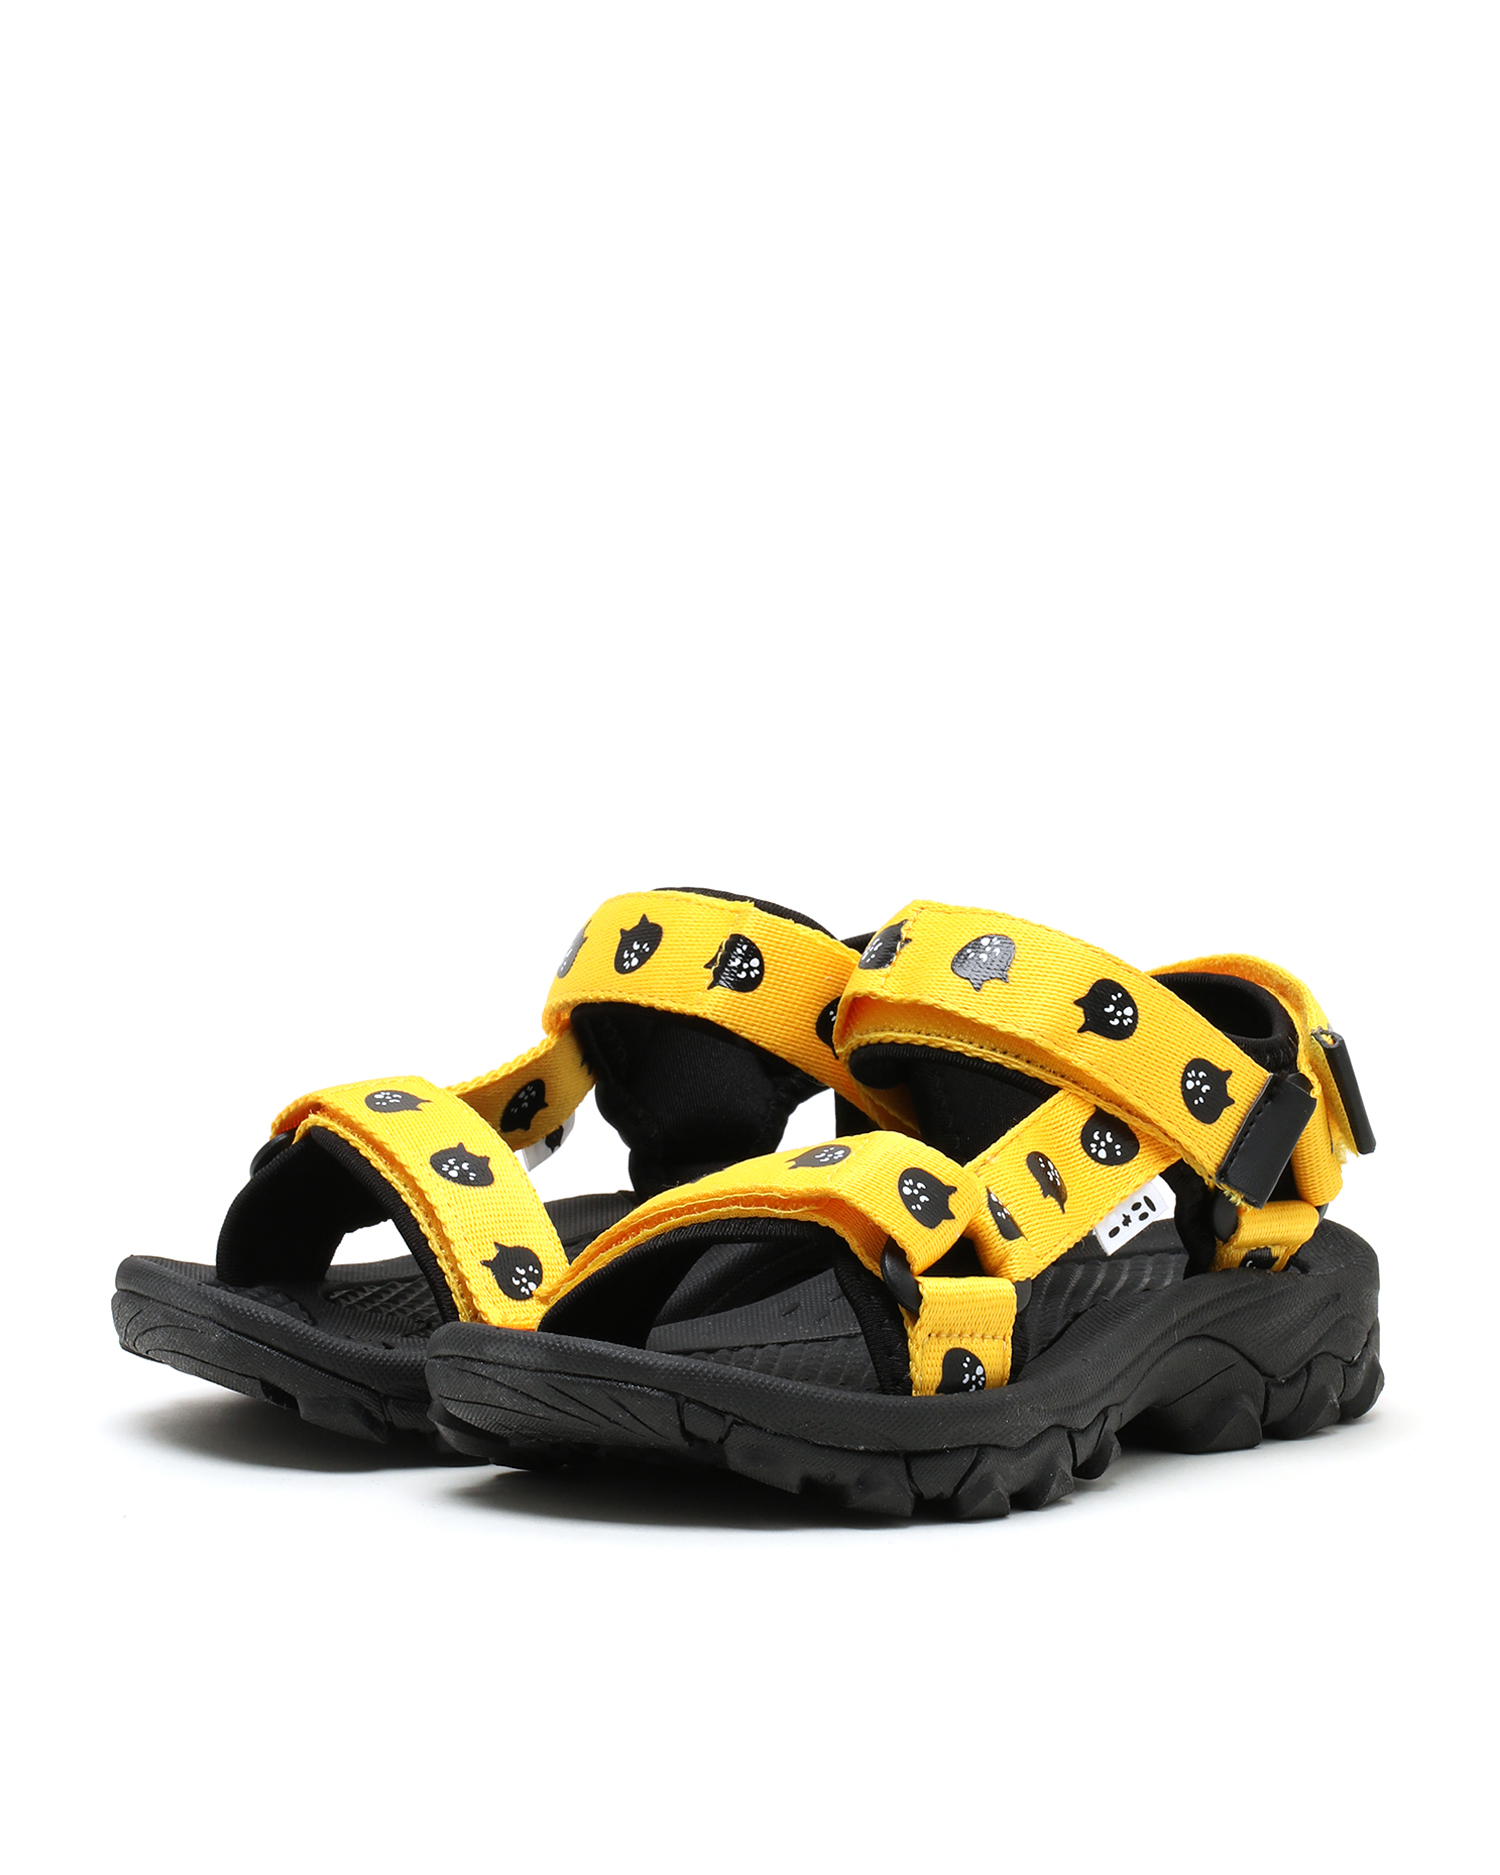 magmur sandals yellow